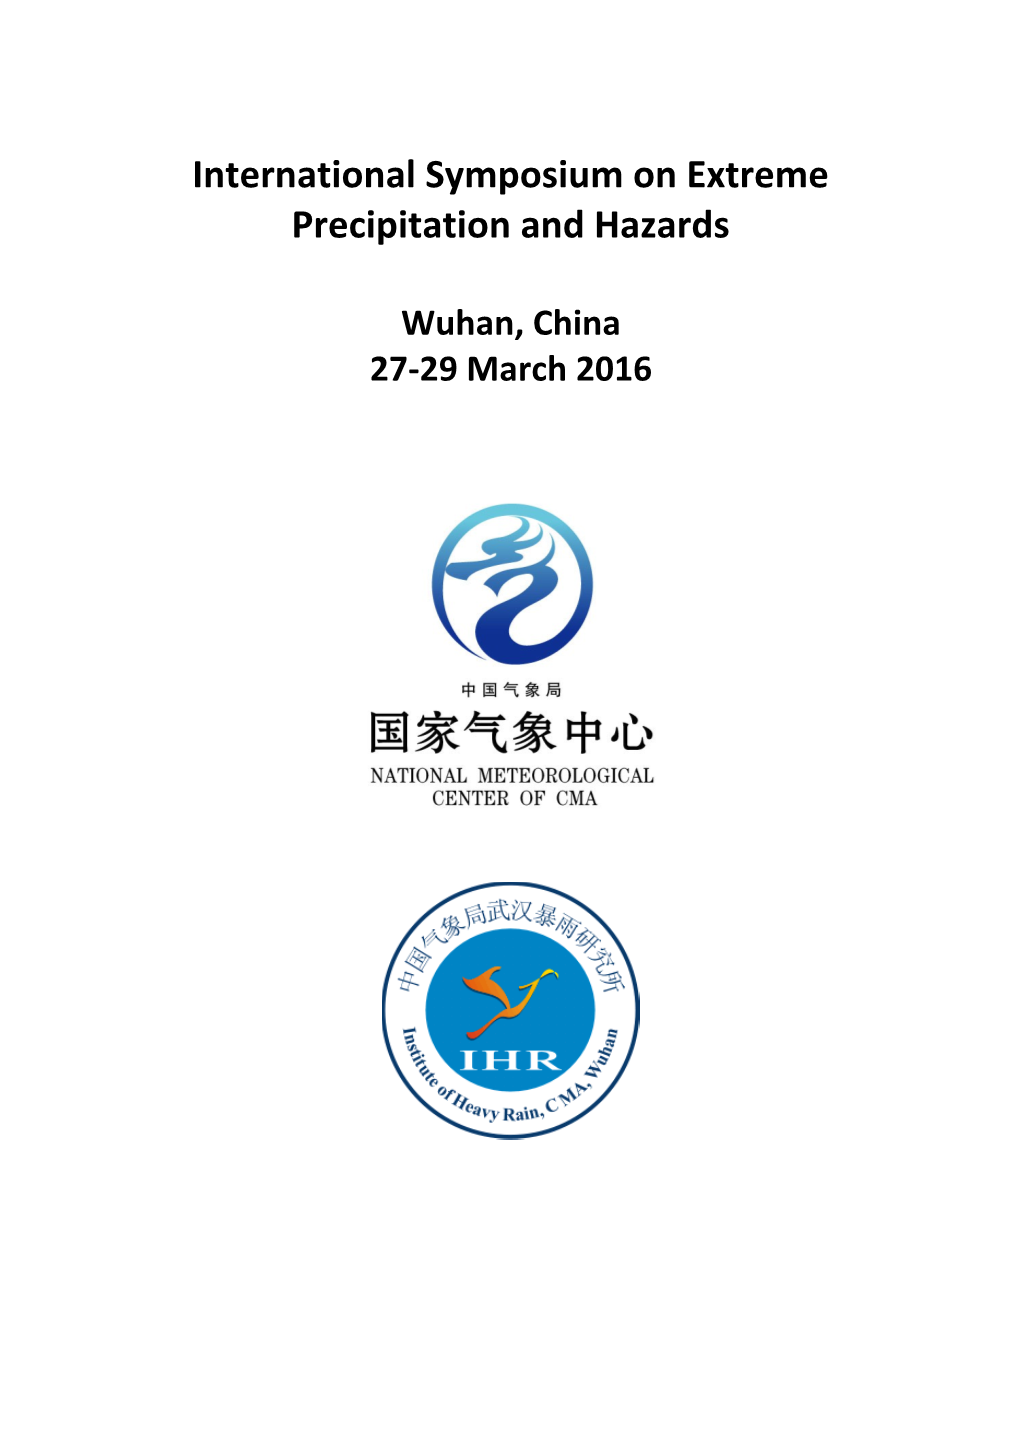 International Symposium on Extreme Precipitation and Hazards